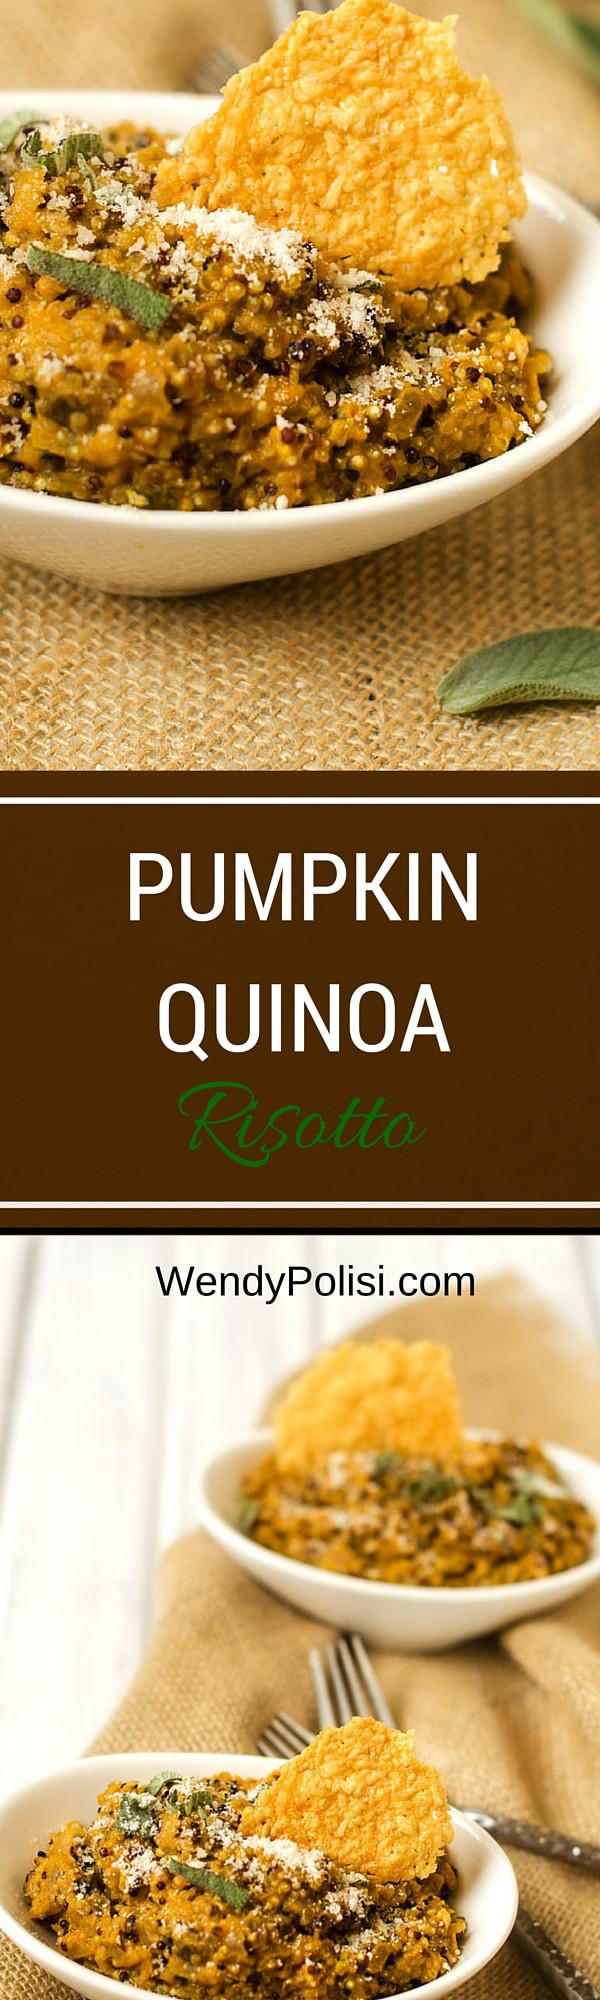 Pumpkin Quinoa Risotto